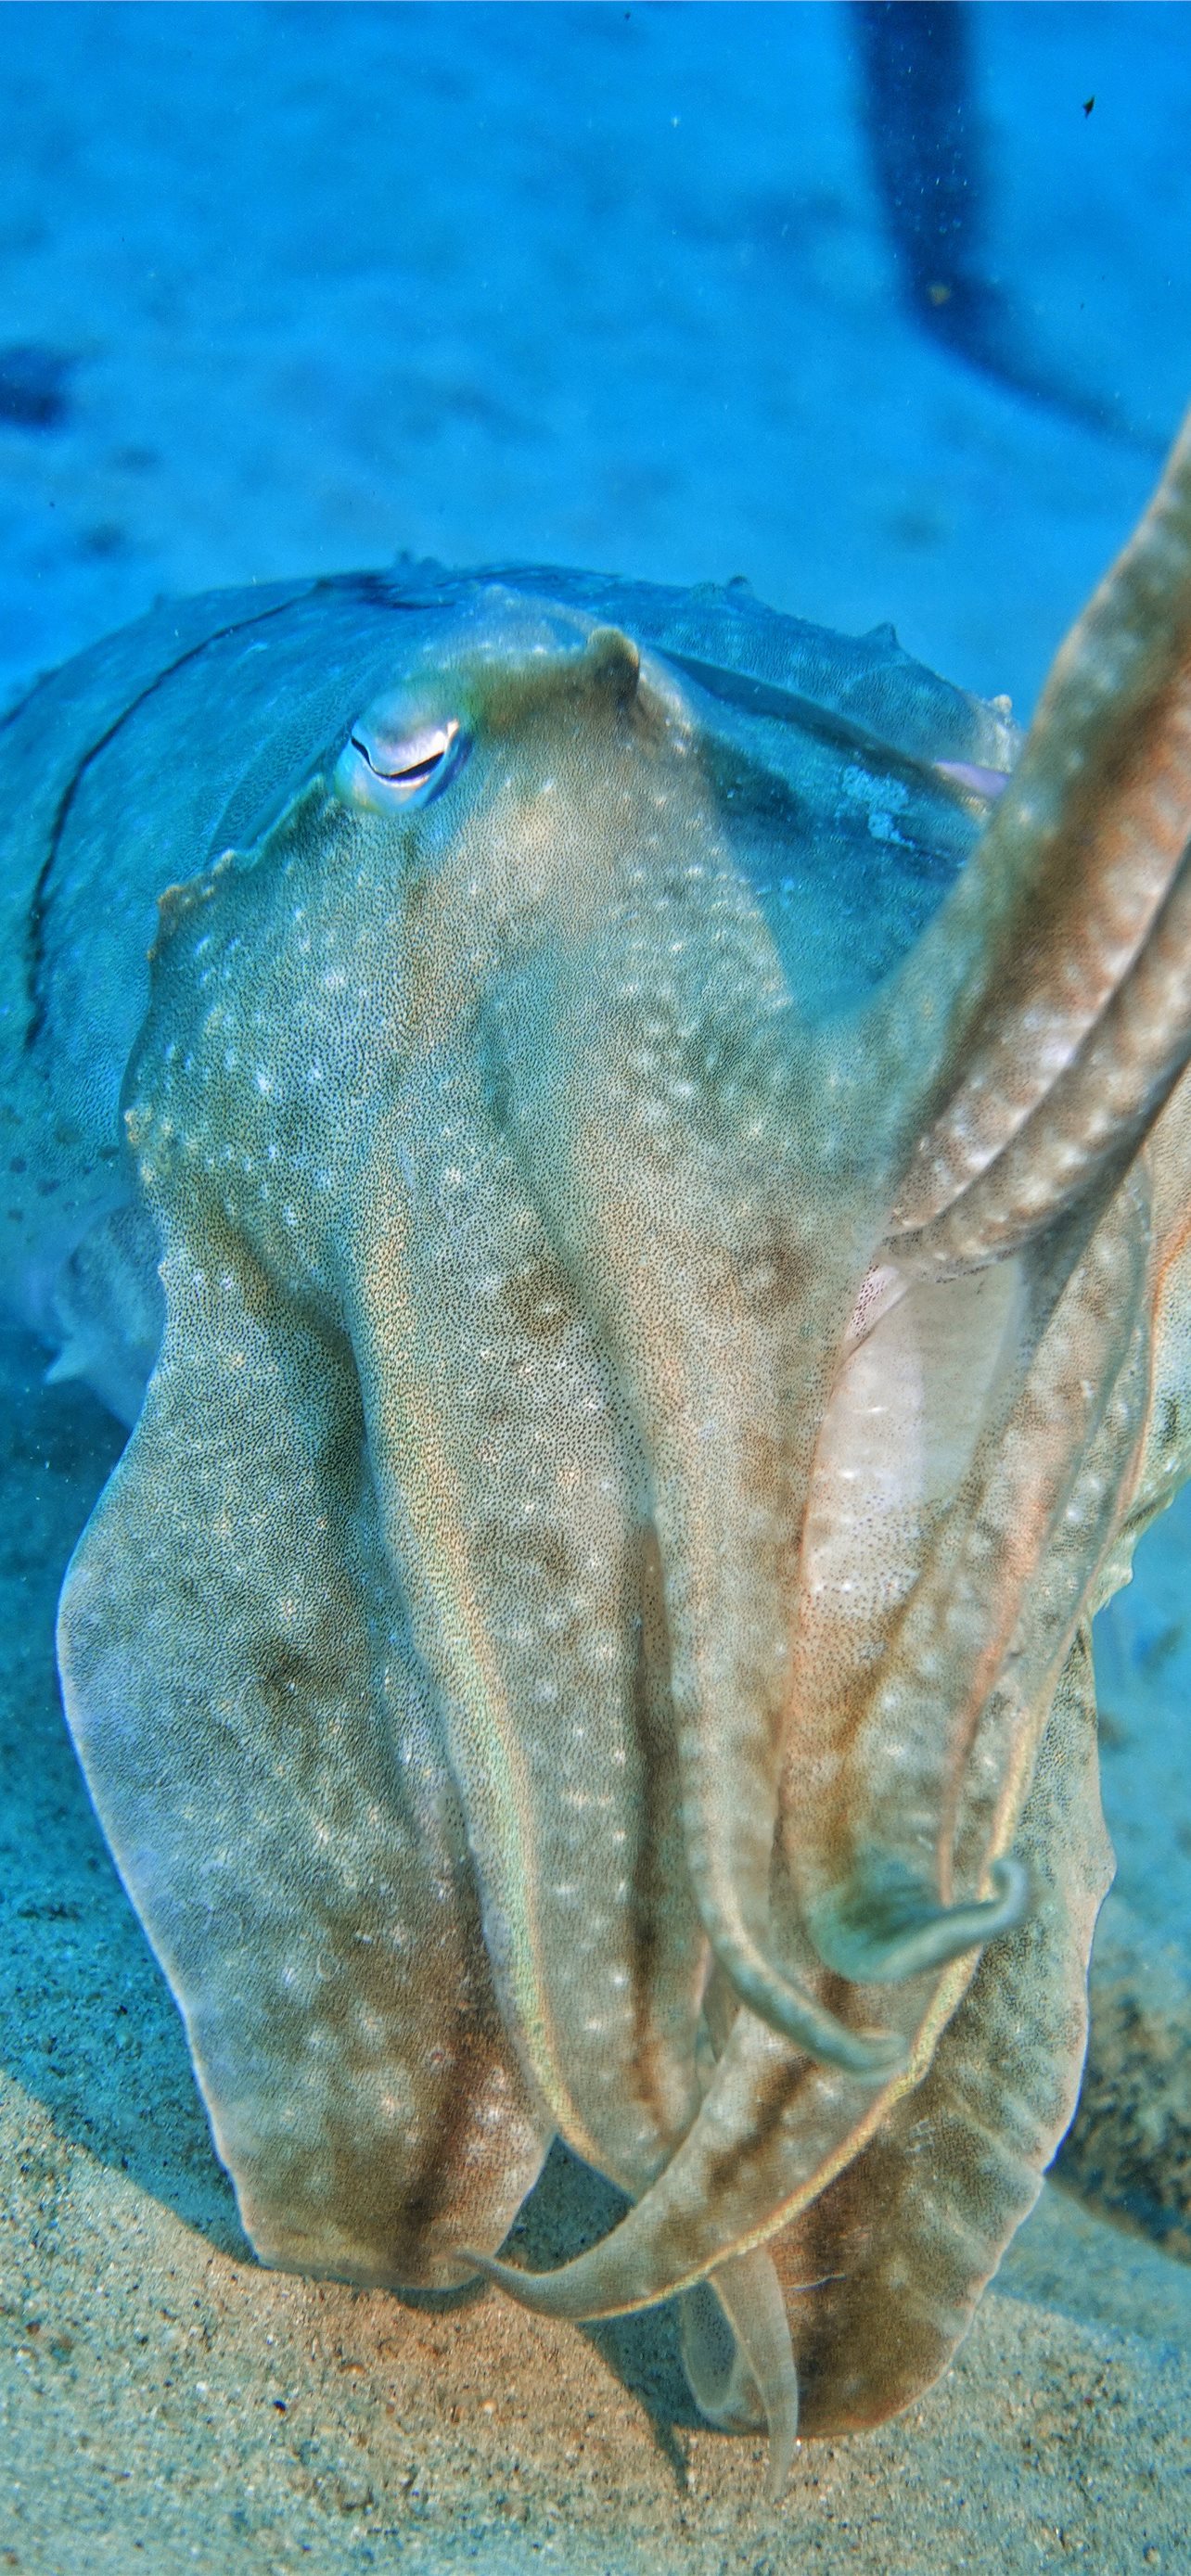 Cuttlefish | Description, Anatomy, & Facts | Britannica